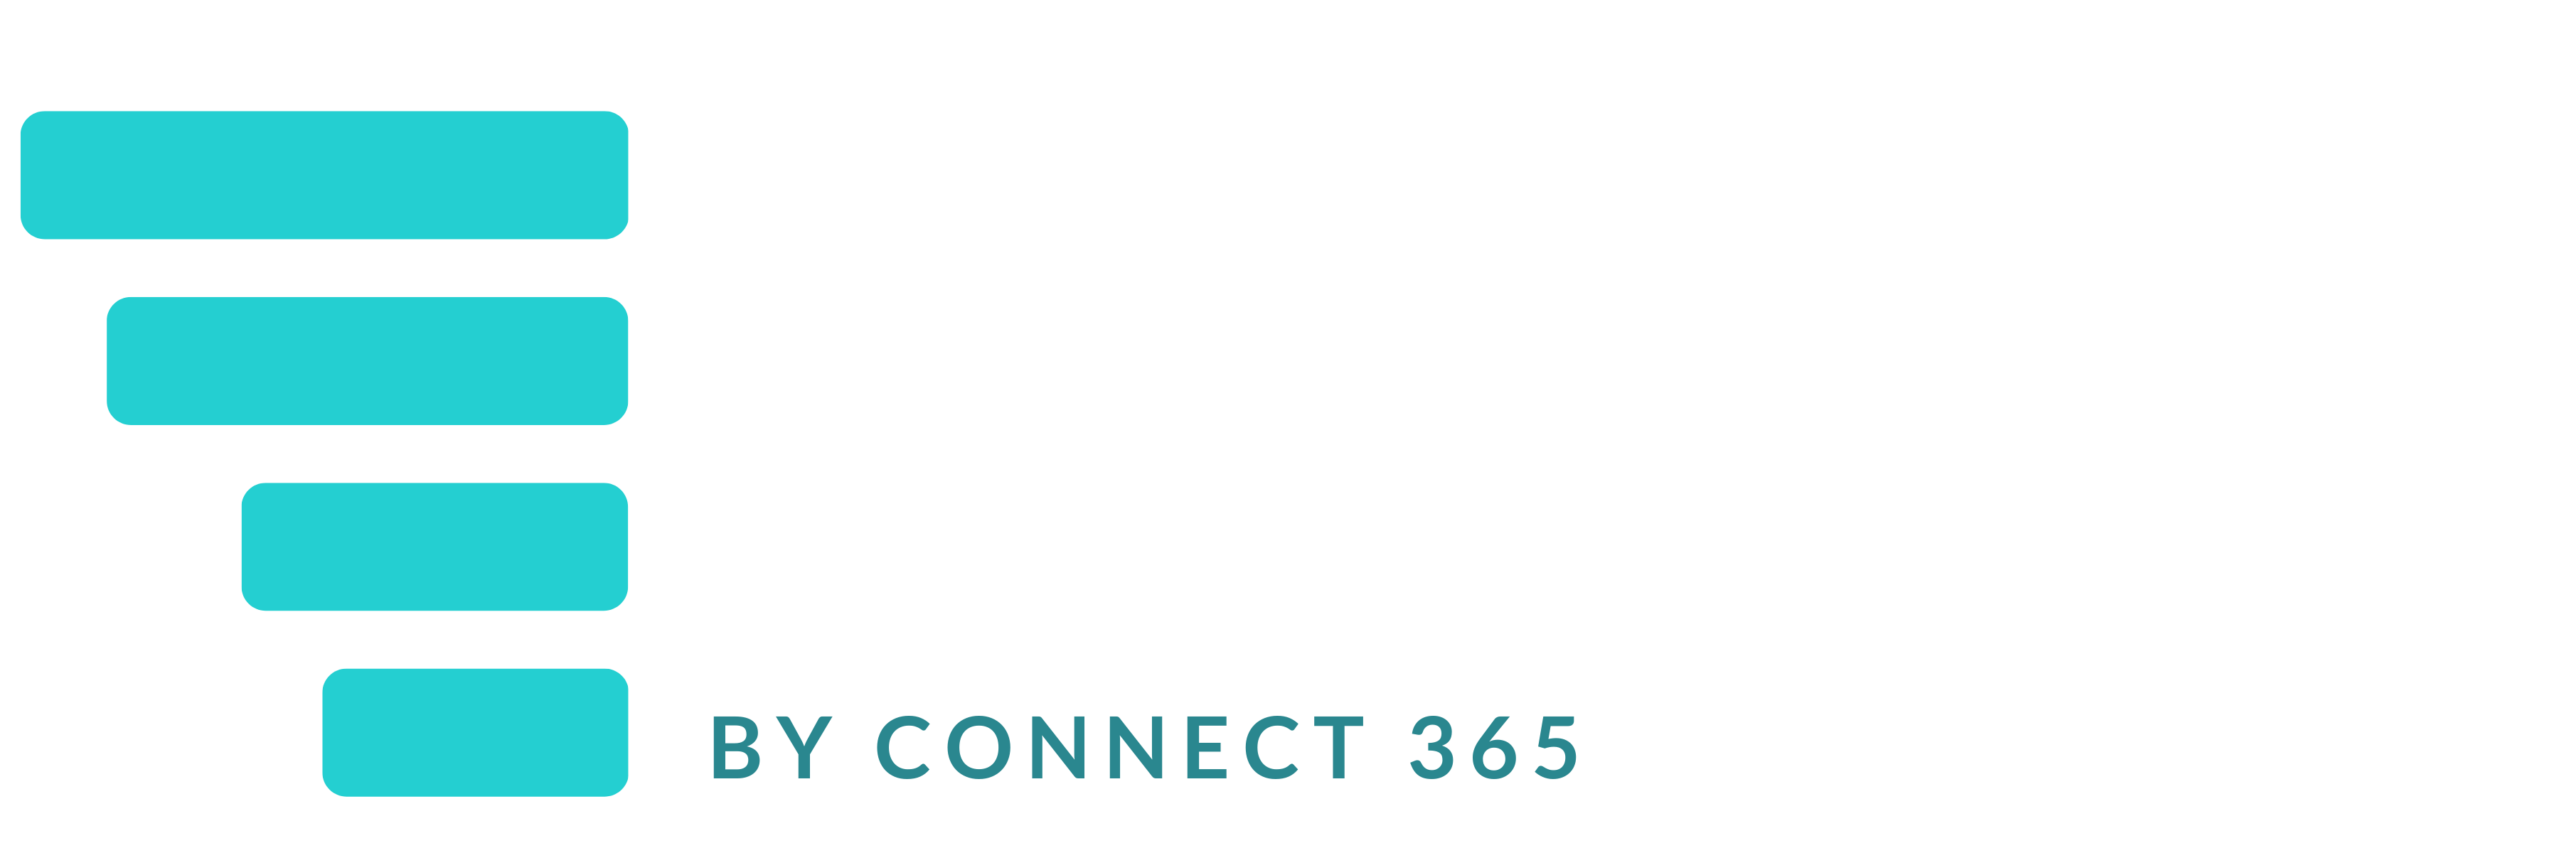 The Lead Generator 2.0